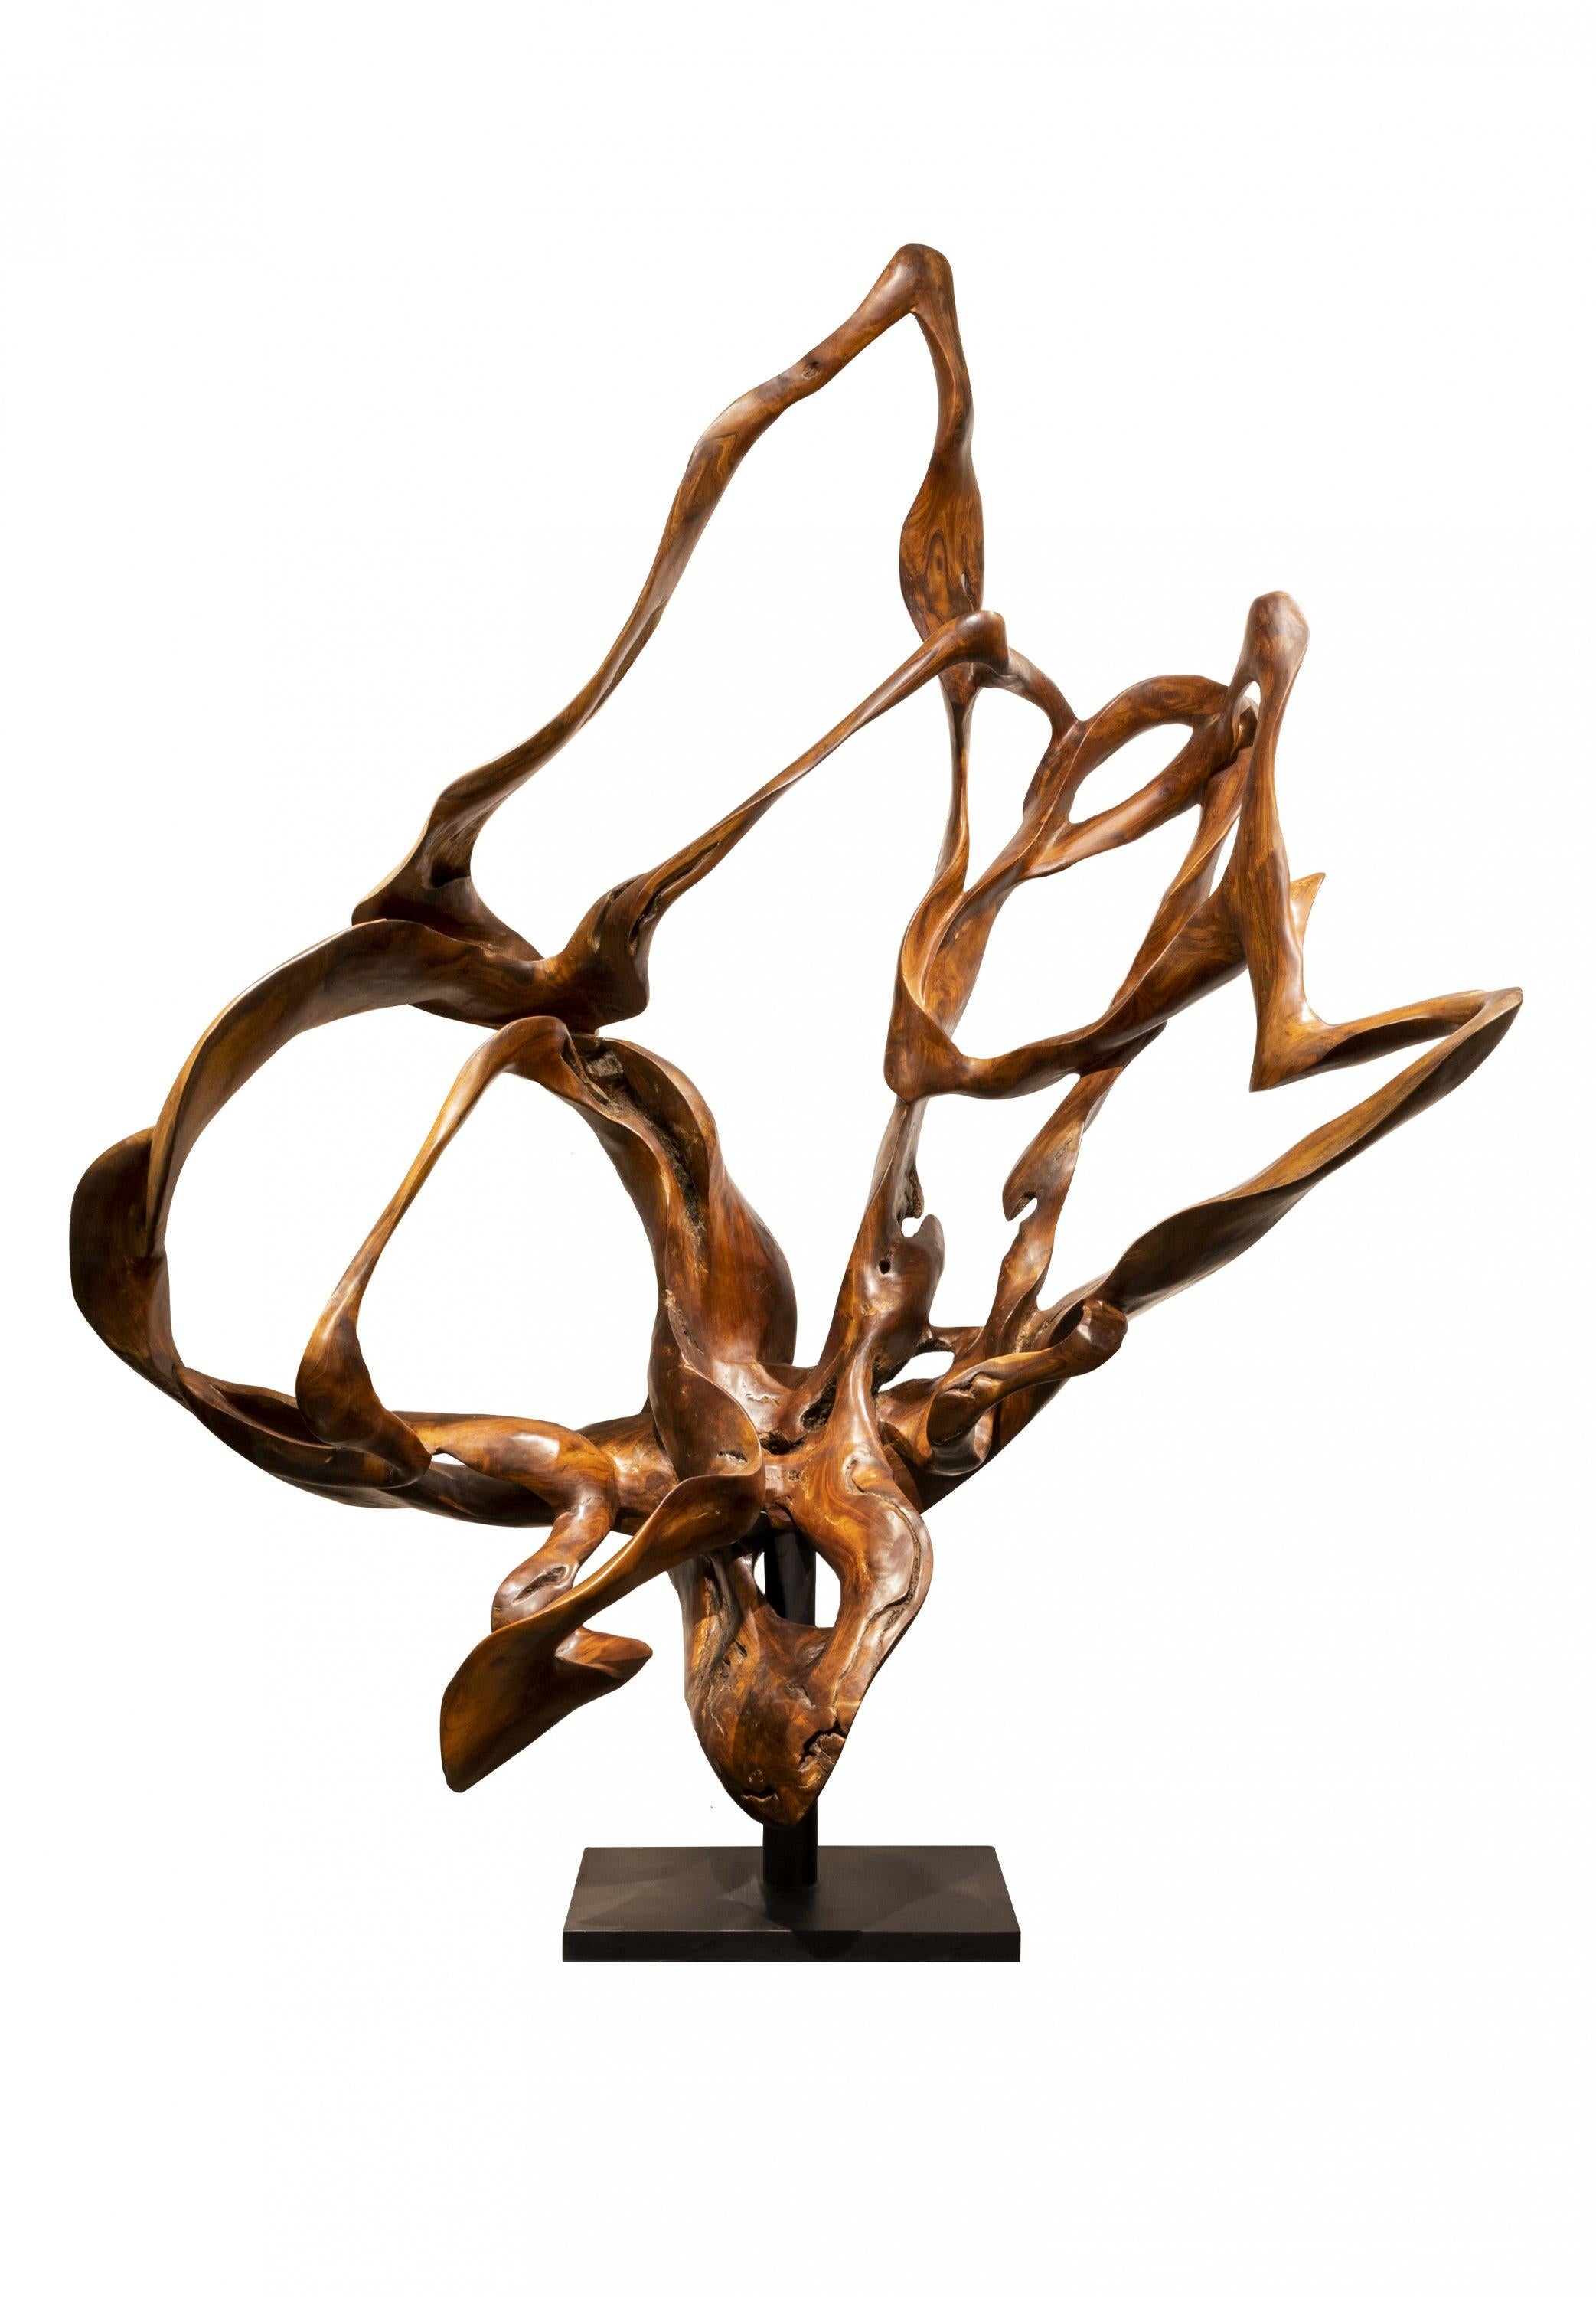 Cirrus - 21. Jahrhundert, Zeitgenössisch, Abstrakte Skulptur, Mahagoni Roots, Holz